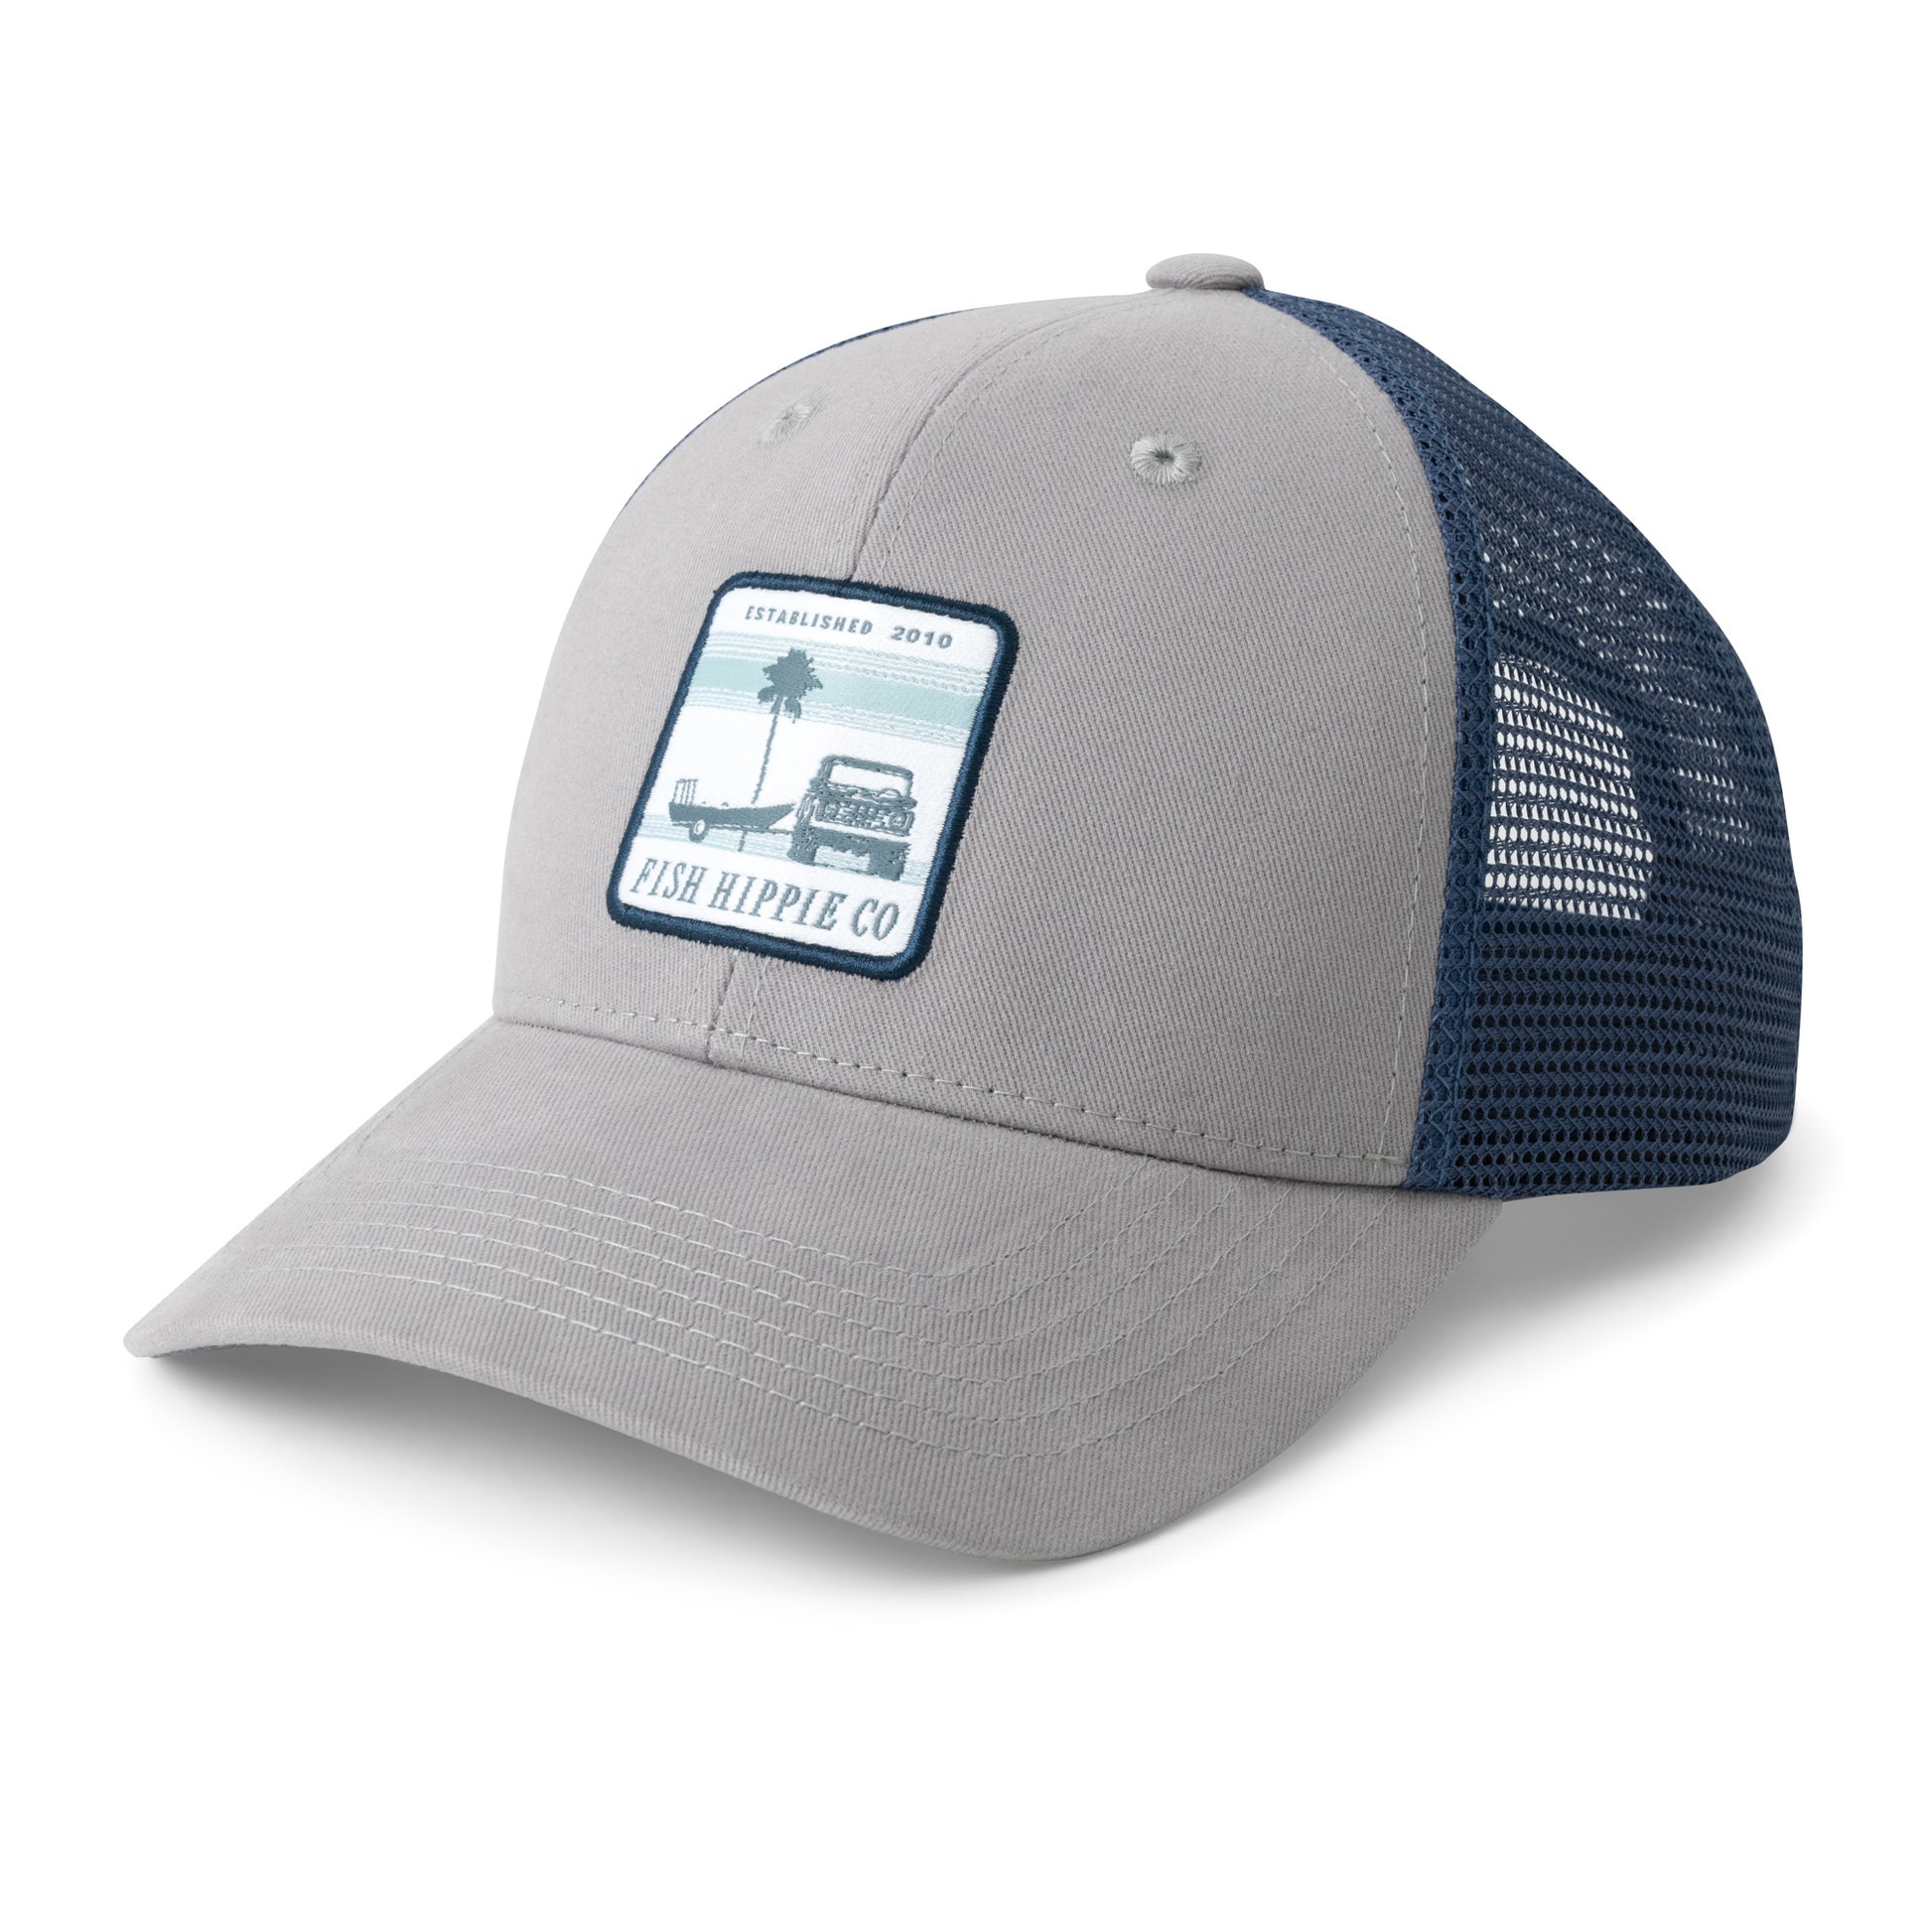 Fish Hippie Revival Trucker Snap Back Hat